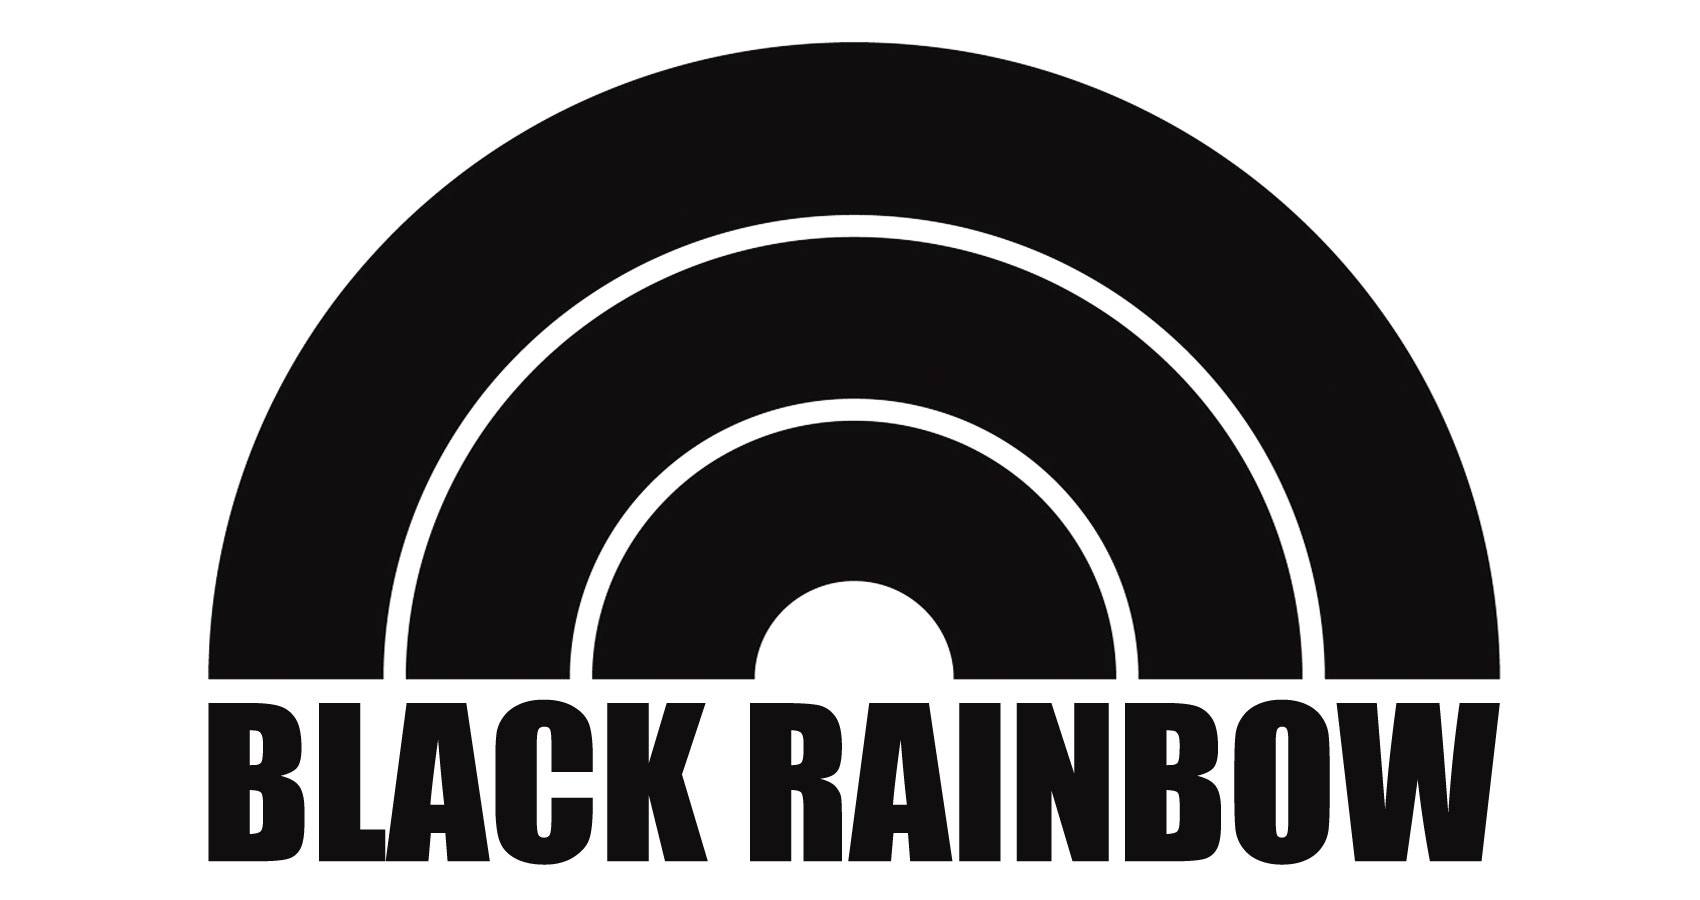 Black Rainbow written by Jecht Fair at